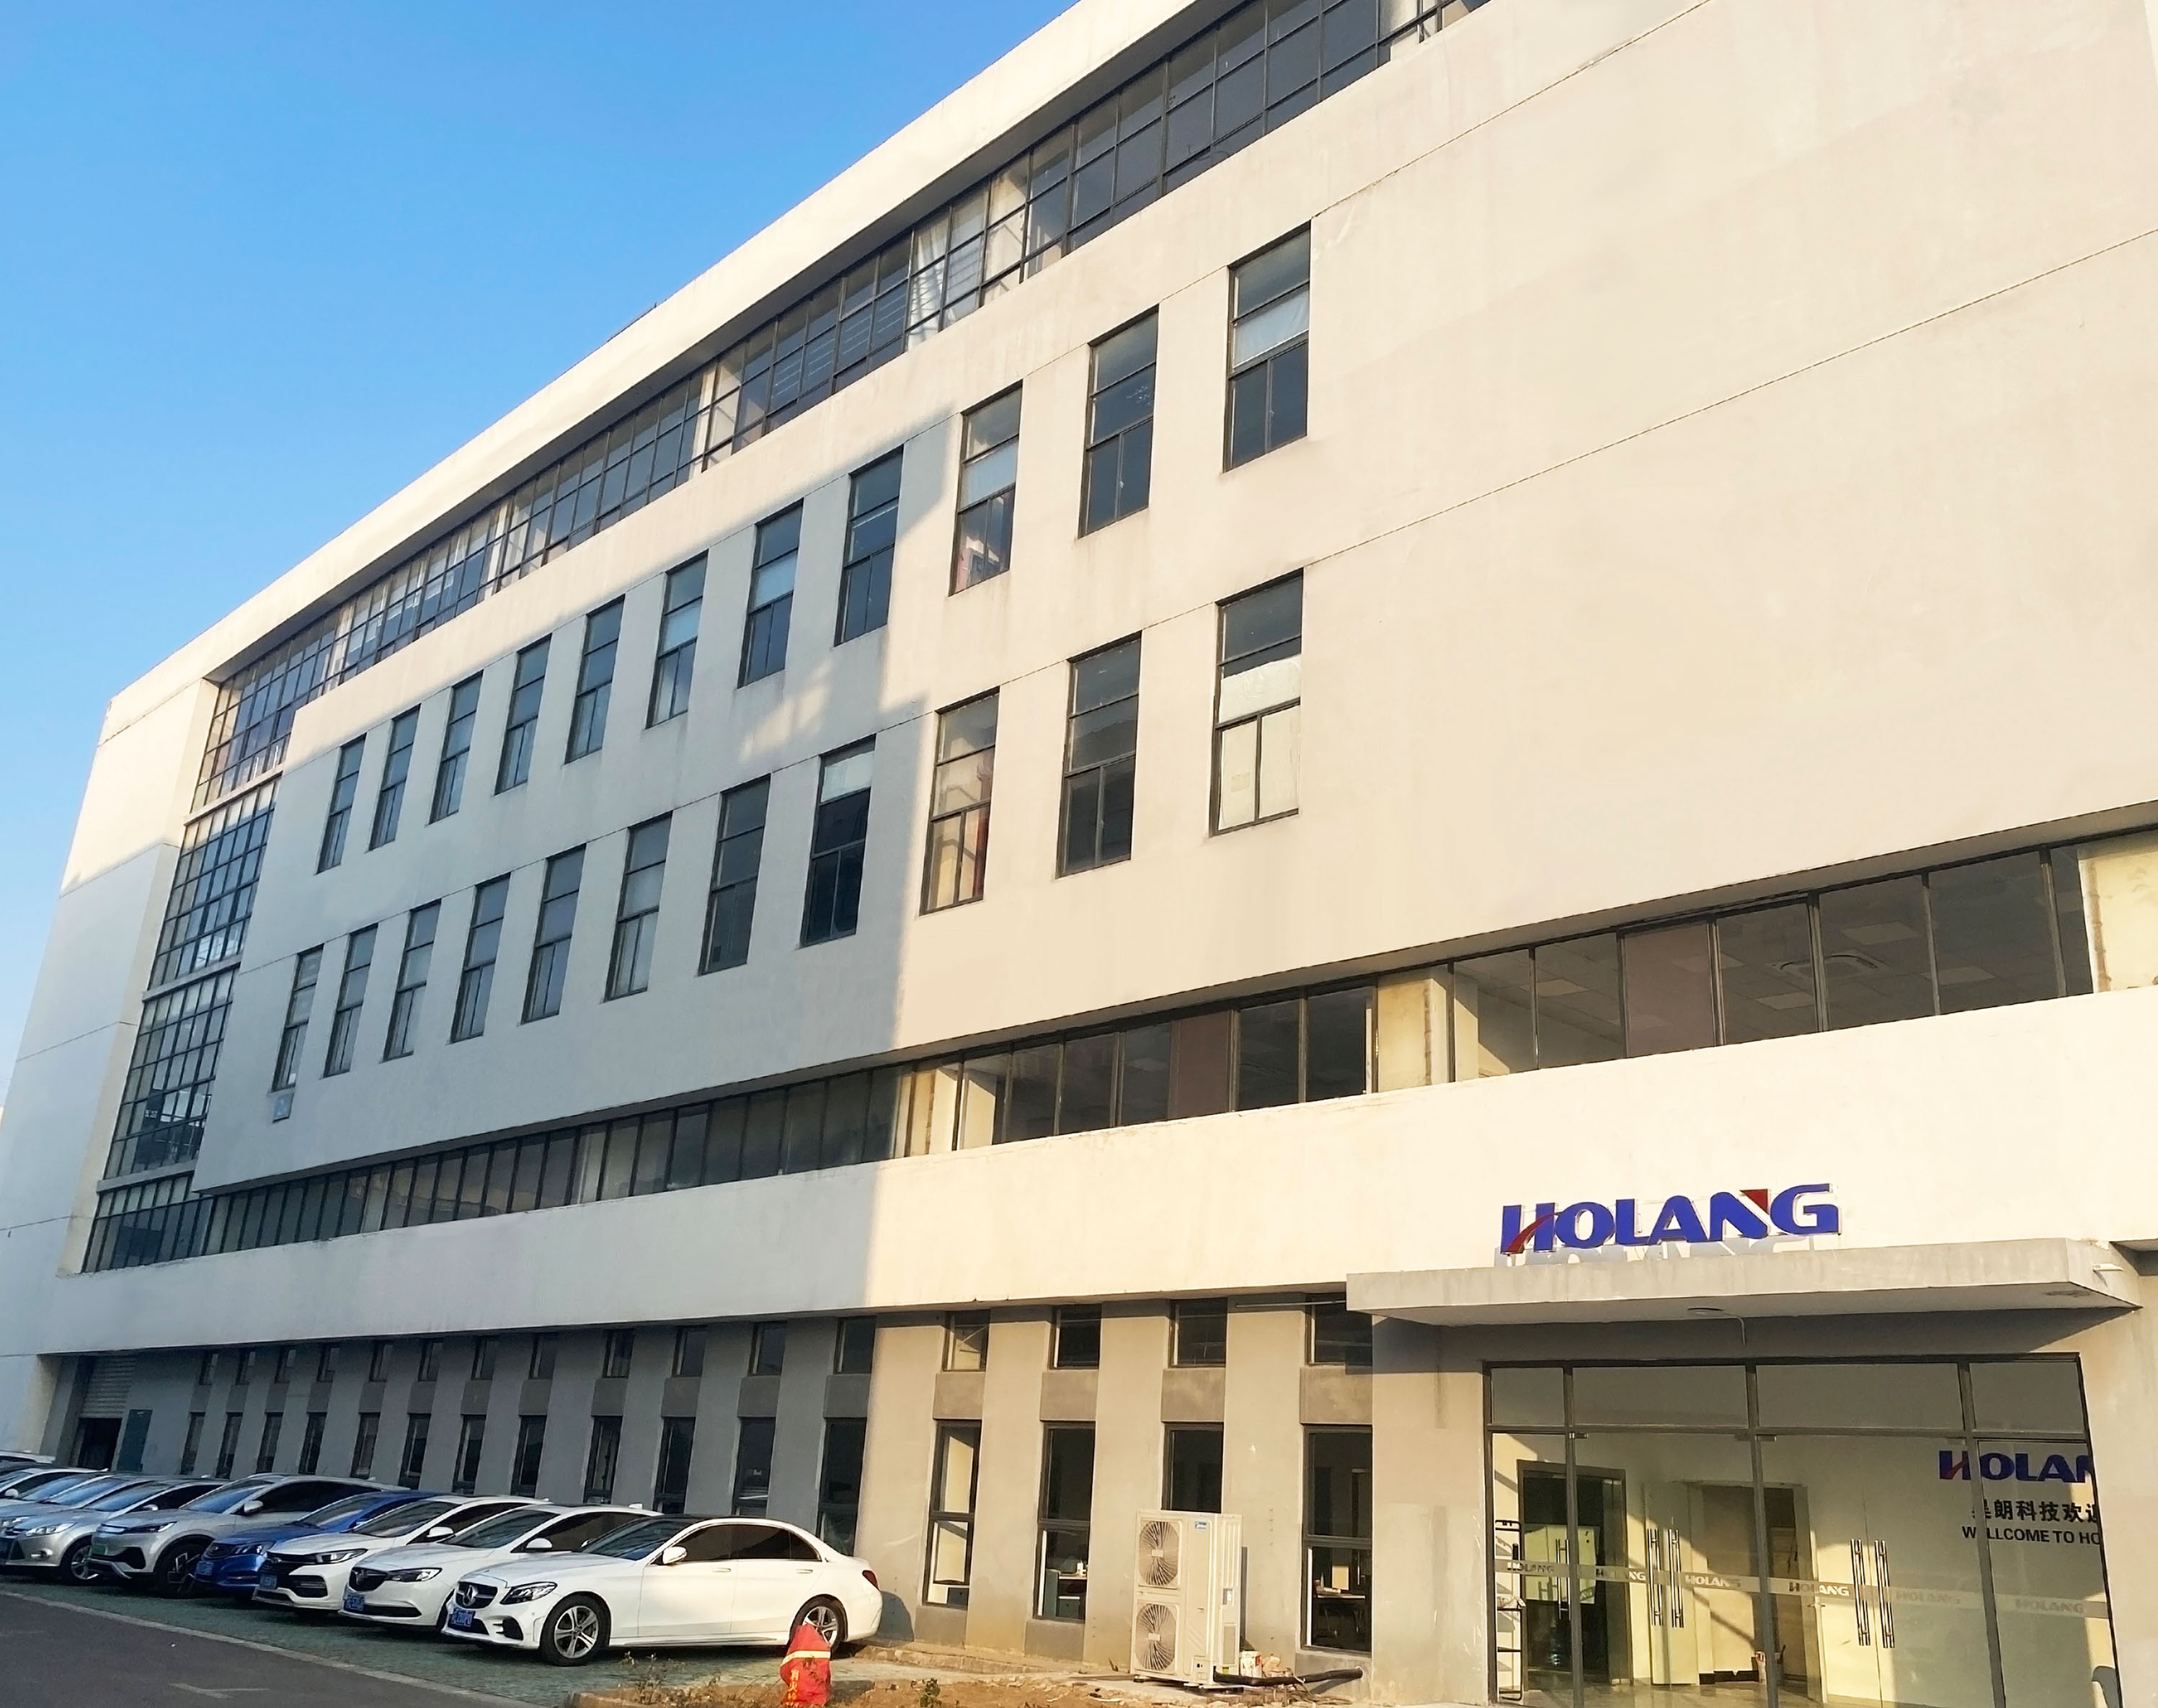 Why SMT Companies Choose Holang Modular Nitrogen Generator